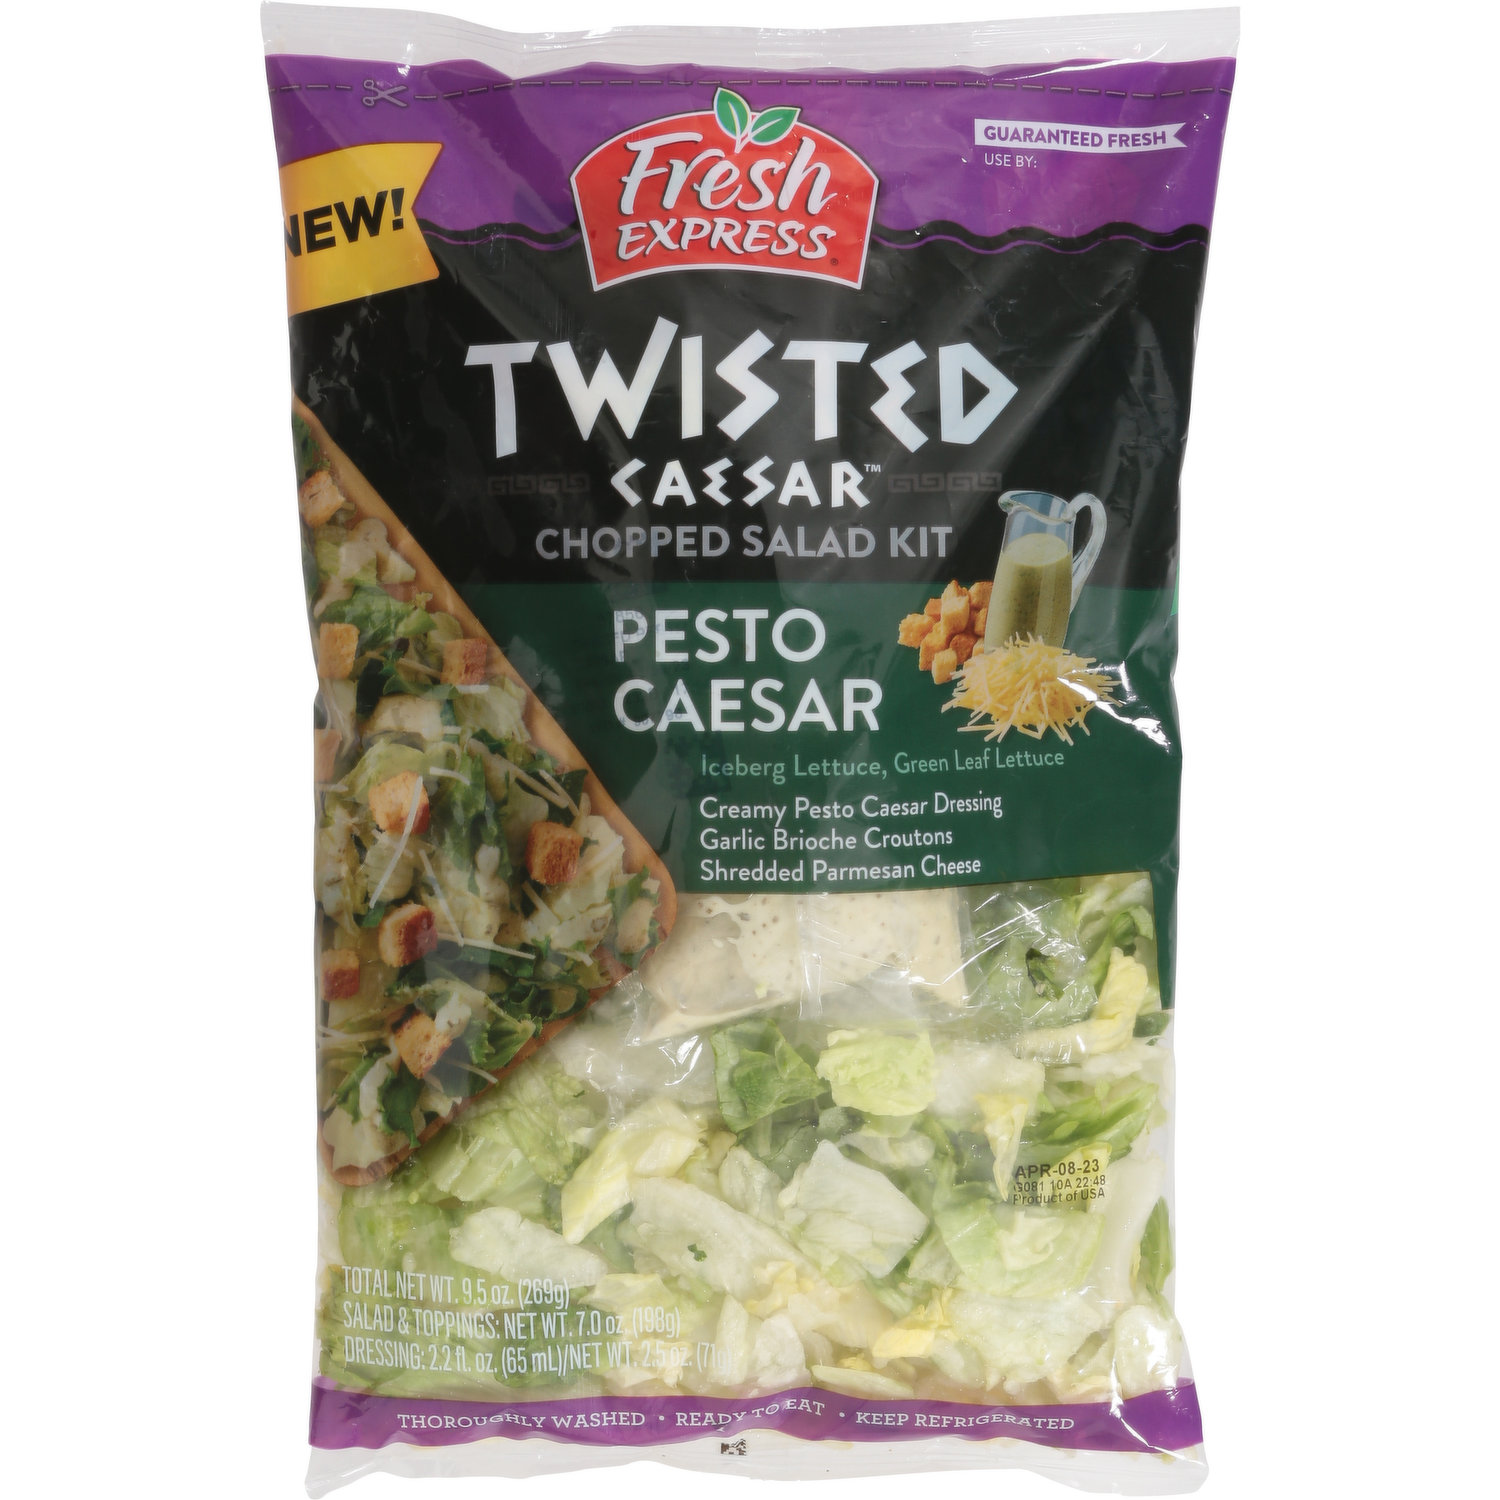 Caesar Salad Tea Towel - Box of 4